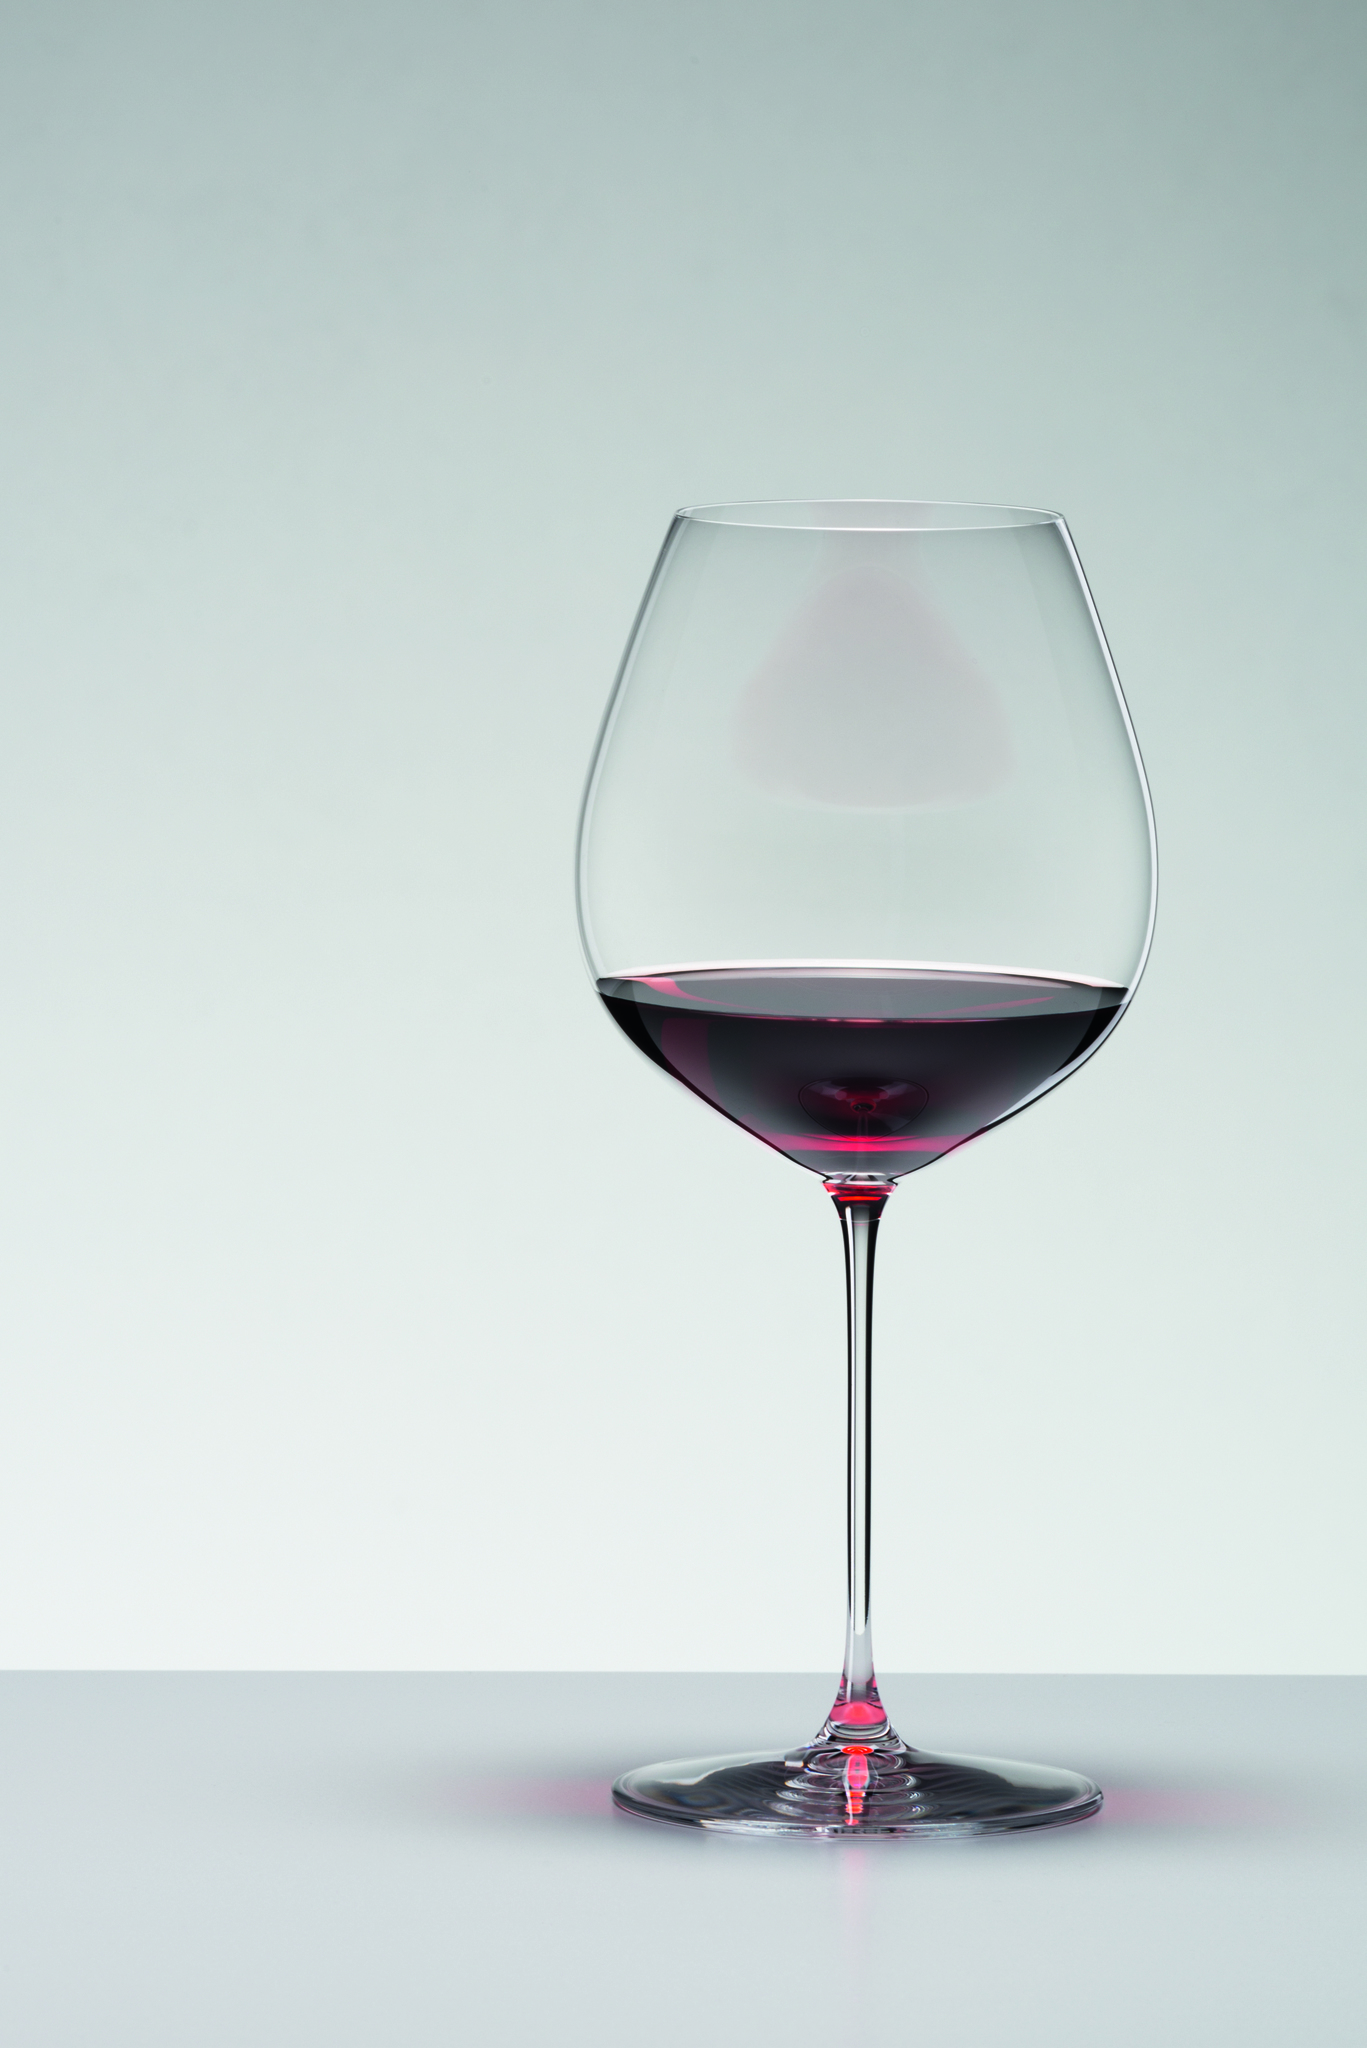 Рюмка красного вина. Riedel бокал для вина veritas New World Pinot Noir/Nebbiolo/Rosé/ Champagne 1449/67 790 мл. Riedel бокалы для вина. Бокал Ридель для Пино Нуар. Бокал Riedel для красного вина.